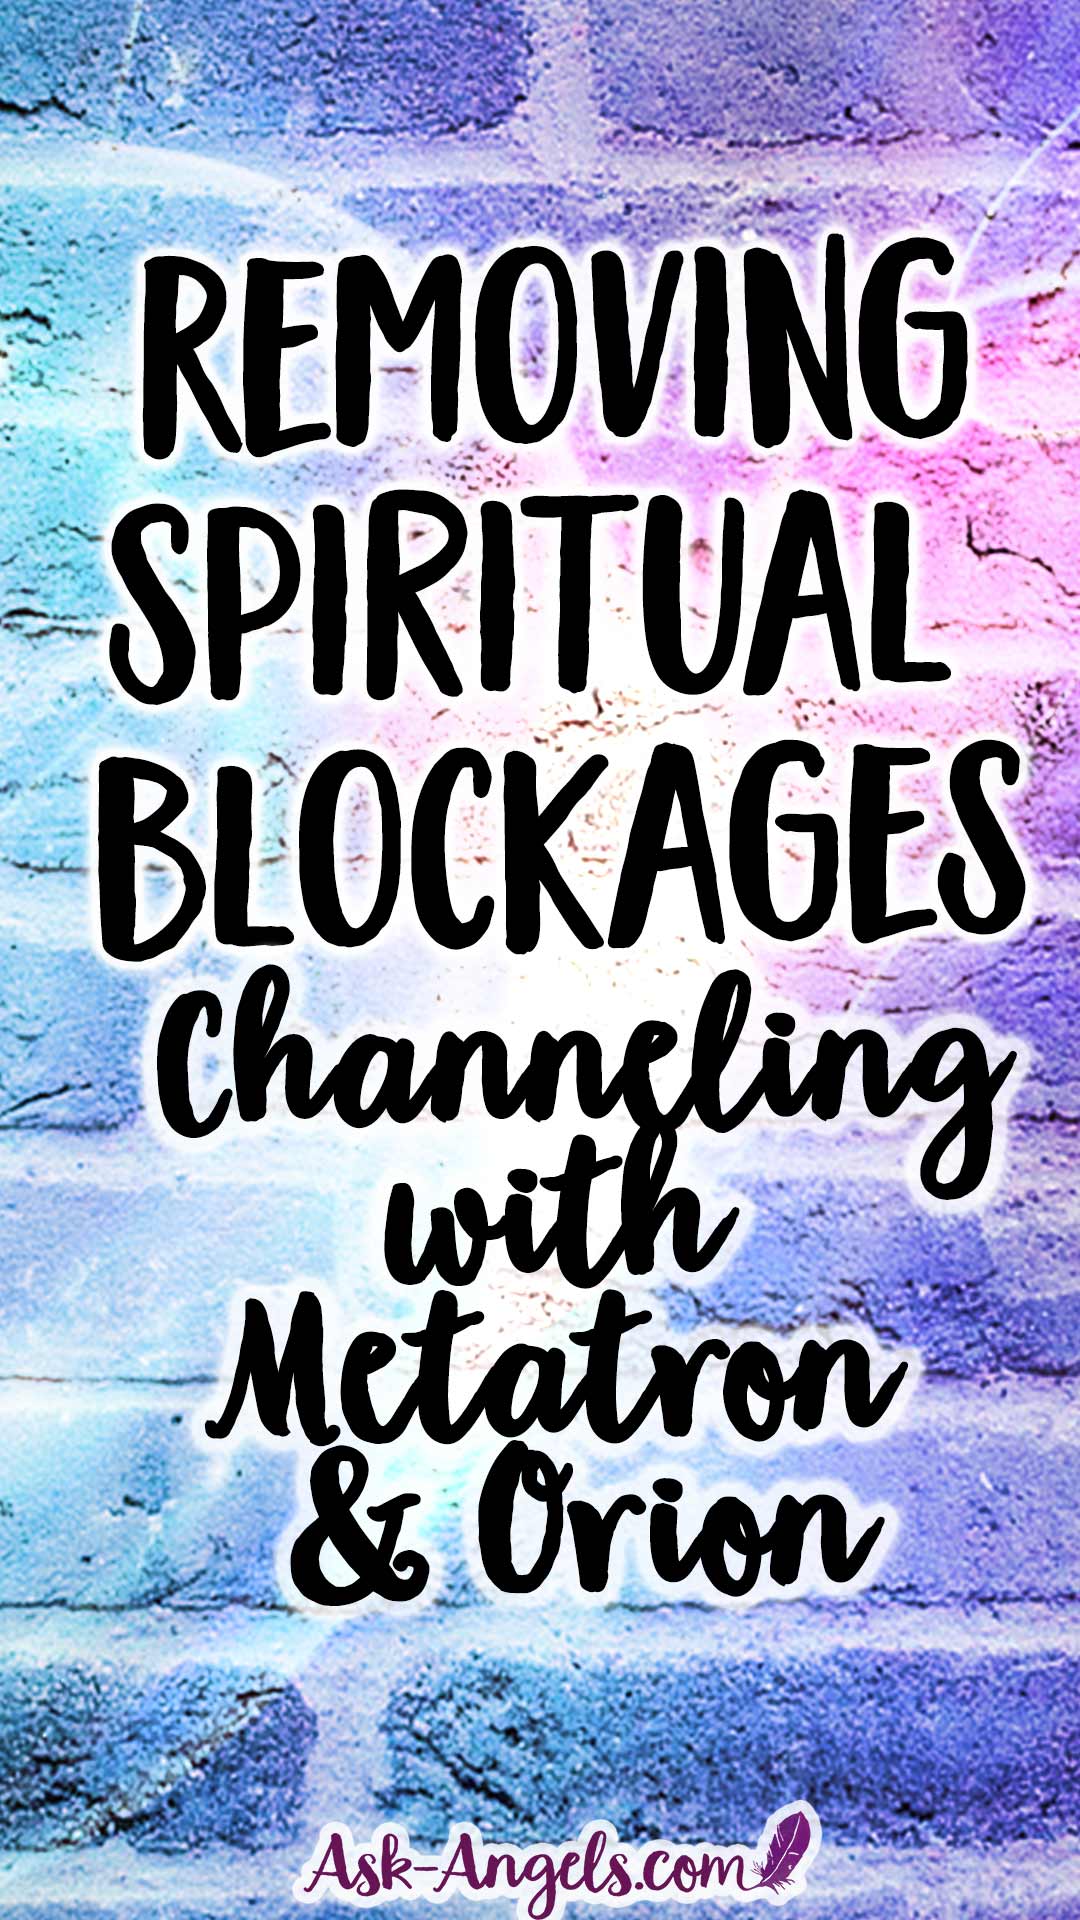 Removing Spiritual Blockages